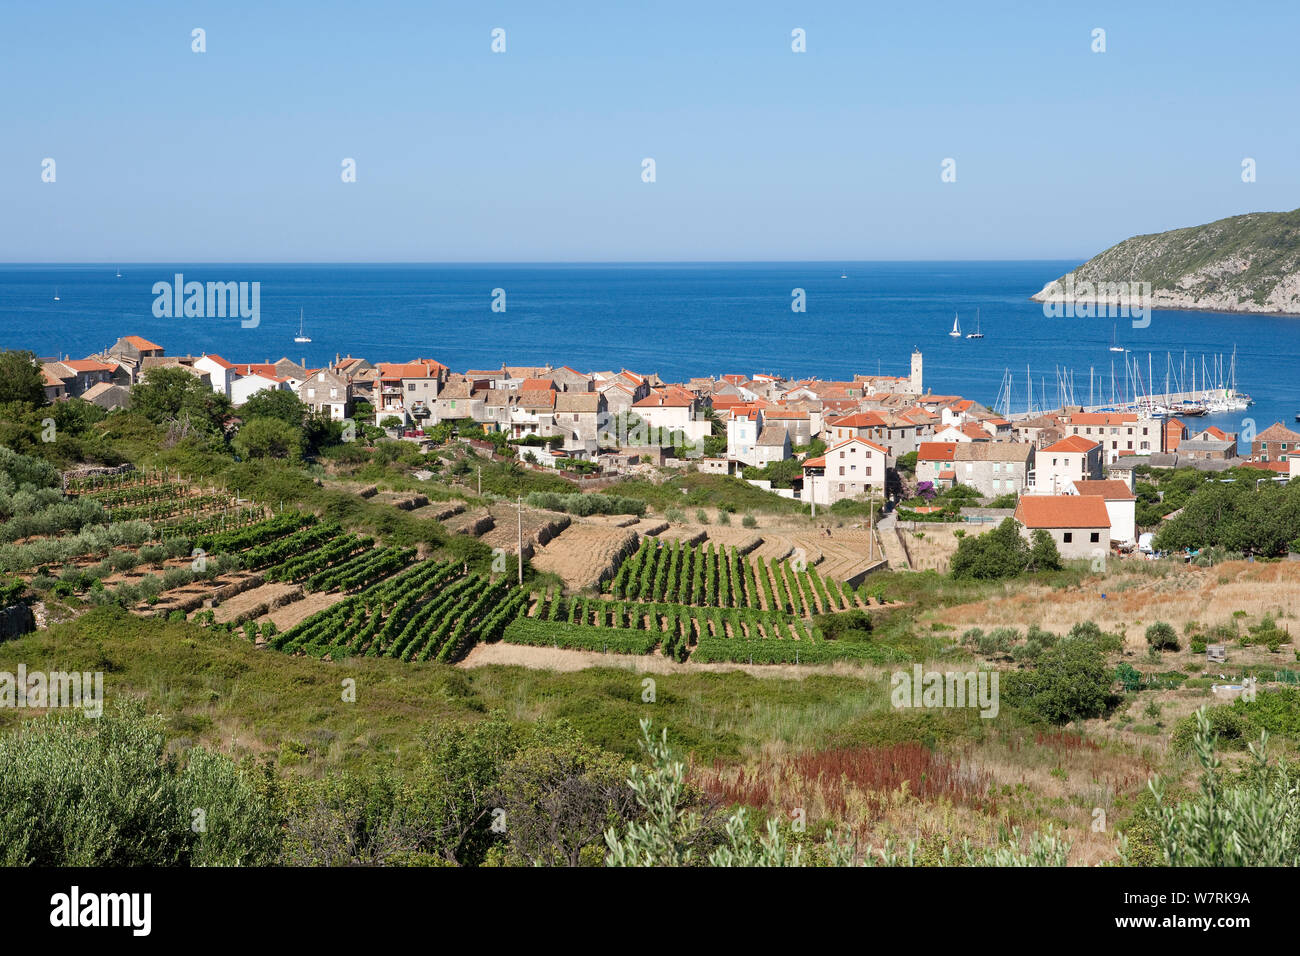 Vineyards with village of Komiza on background, Vis Island, Croatia, Adriatic Sea, Mediterranean Stock Photo